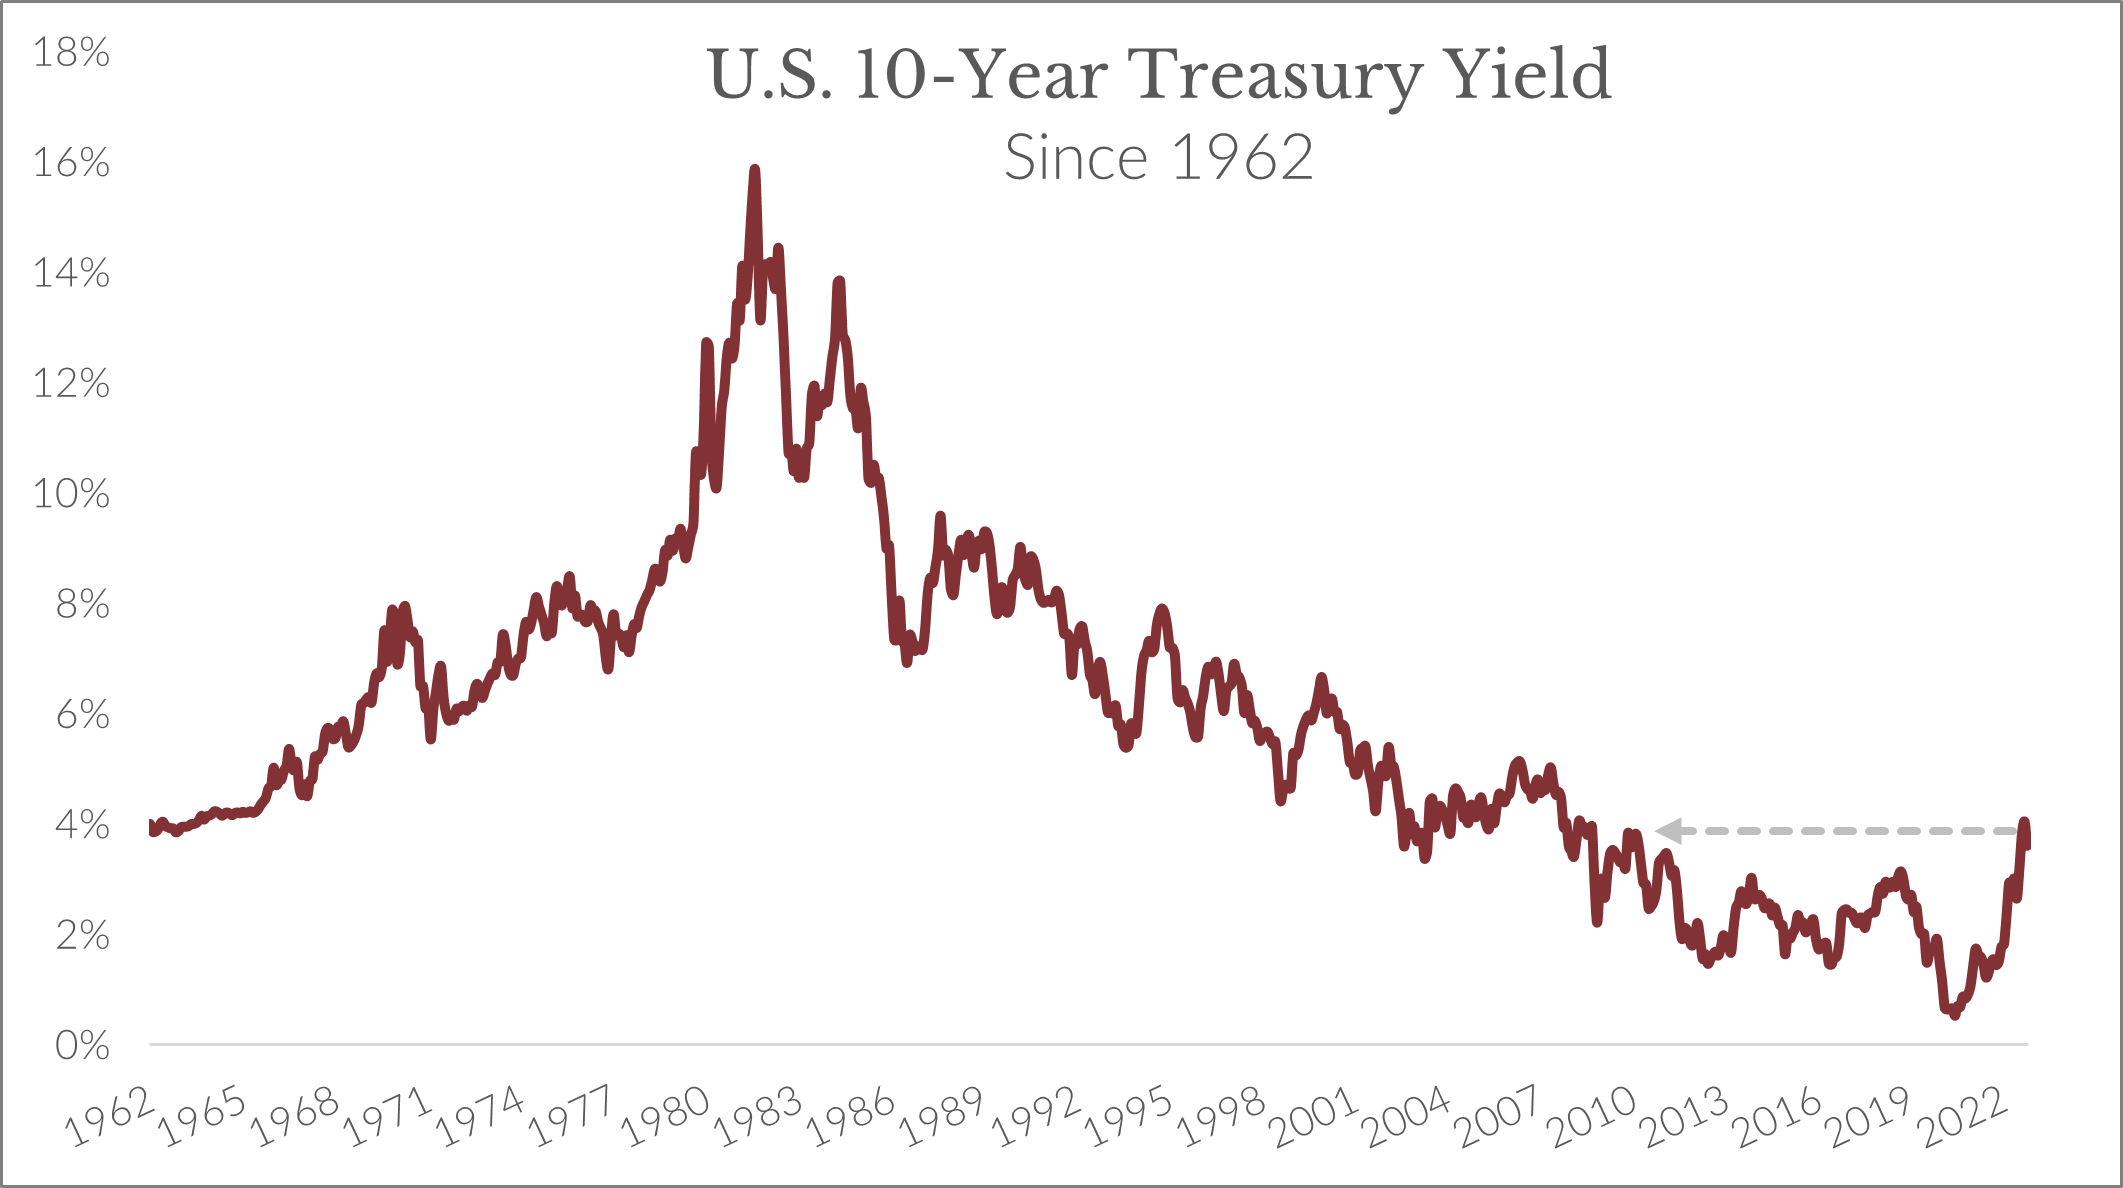 U.S. 10-Year Treasury Period since 1962